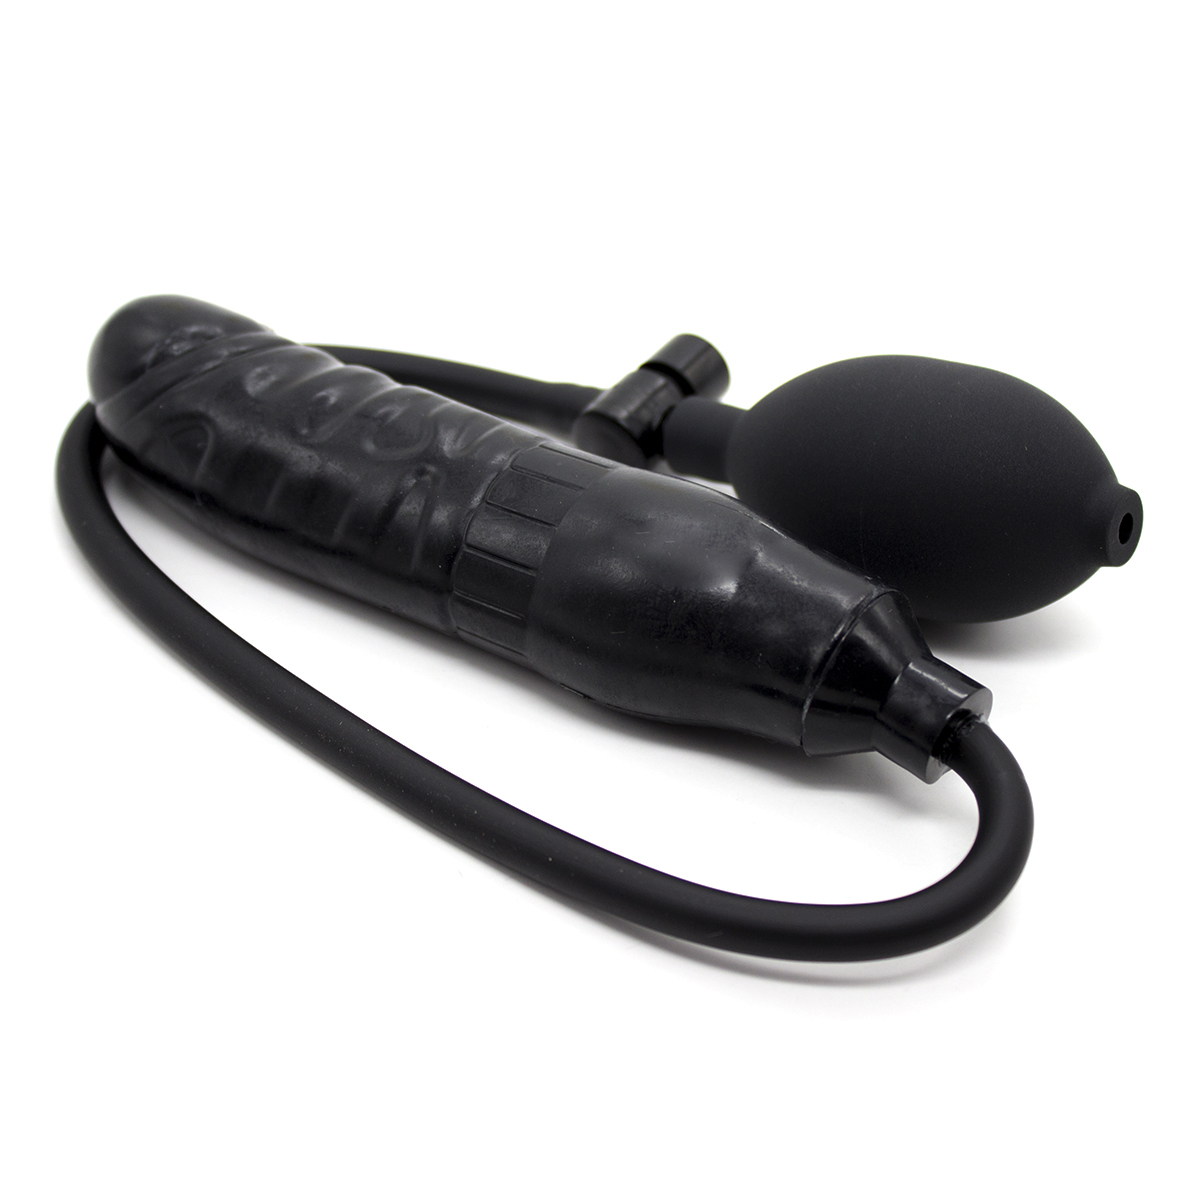 Inflatable-Dildo-Black-OPR-321083-2